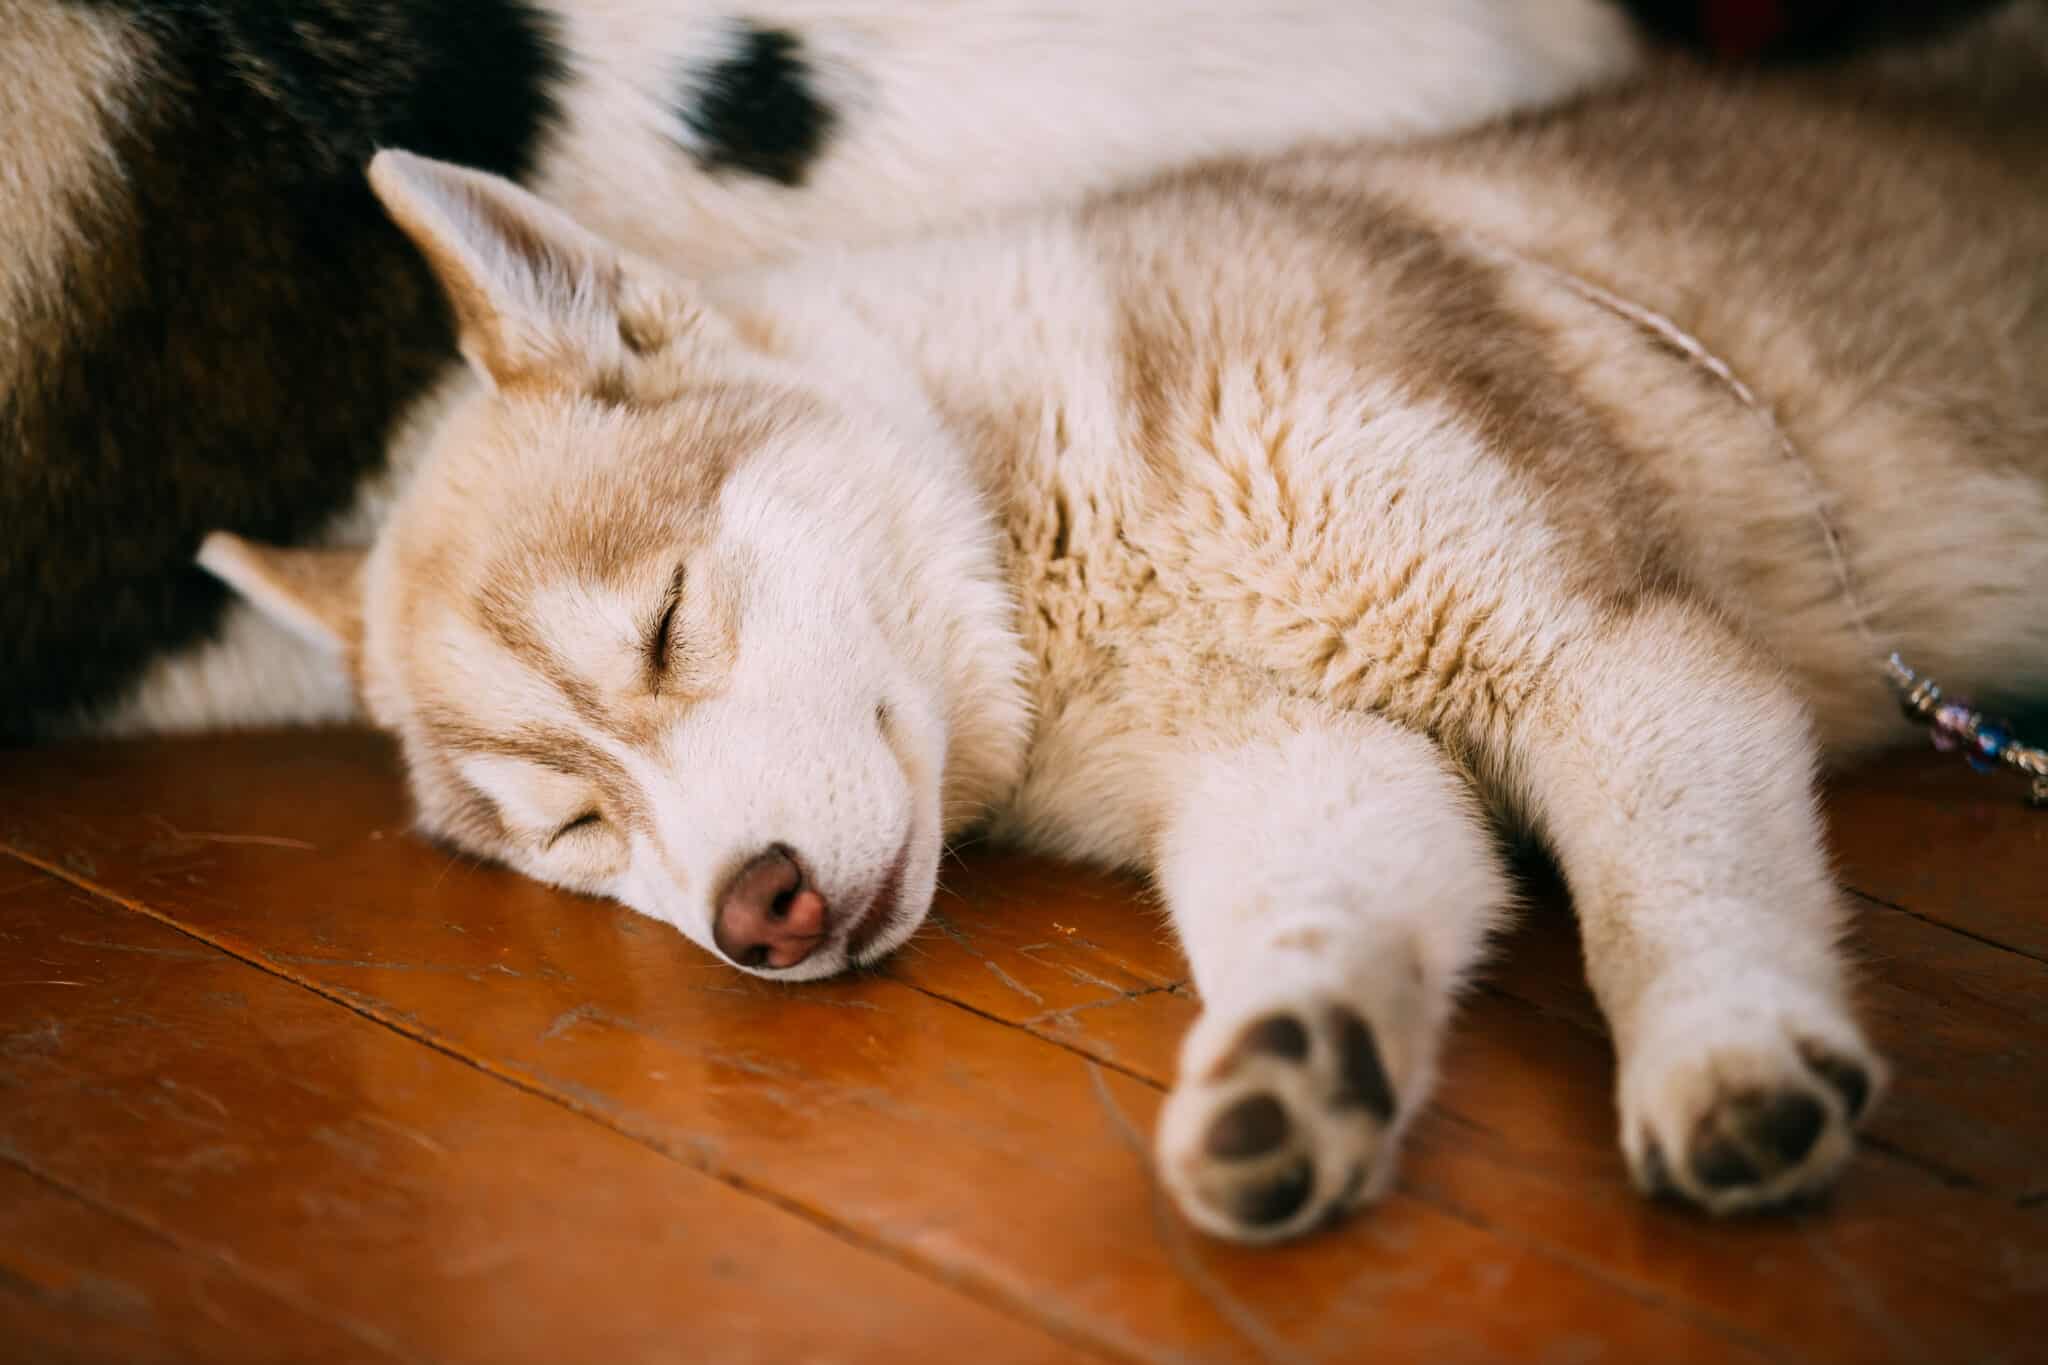 Do husky puppies sleep a lot?